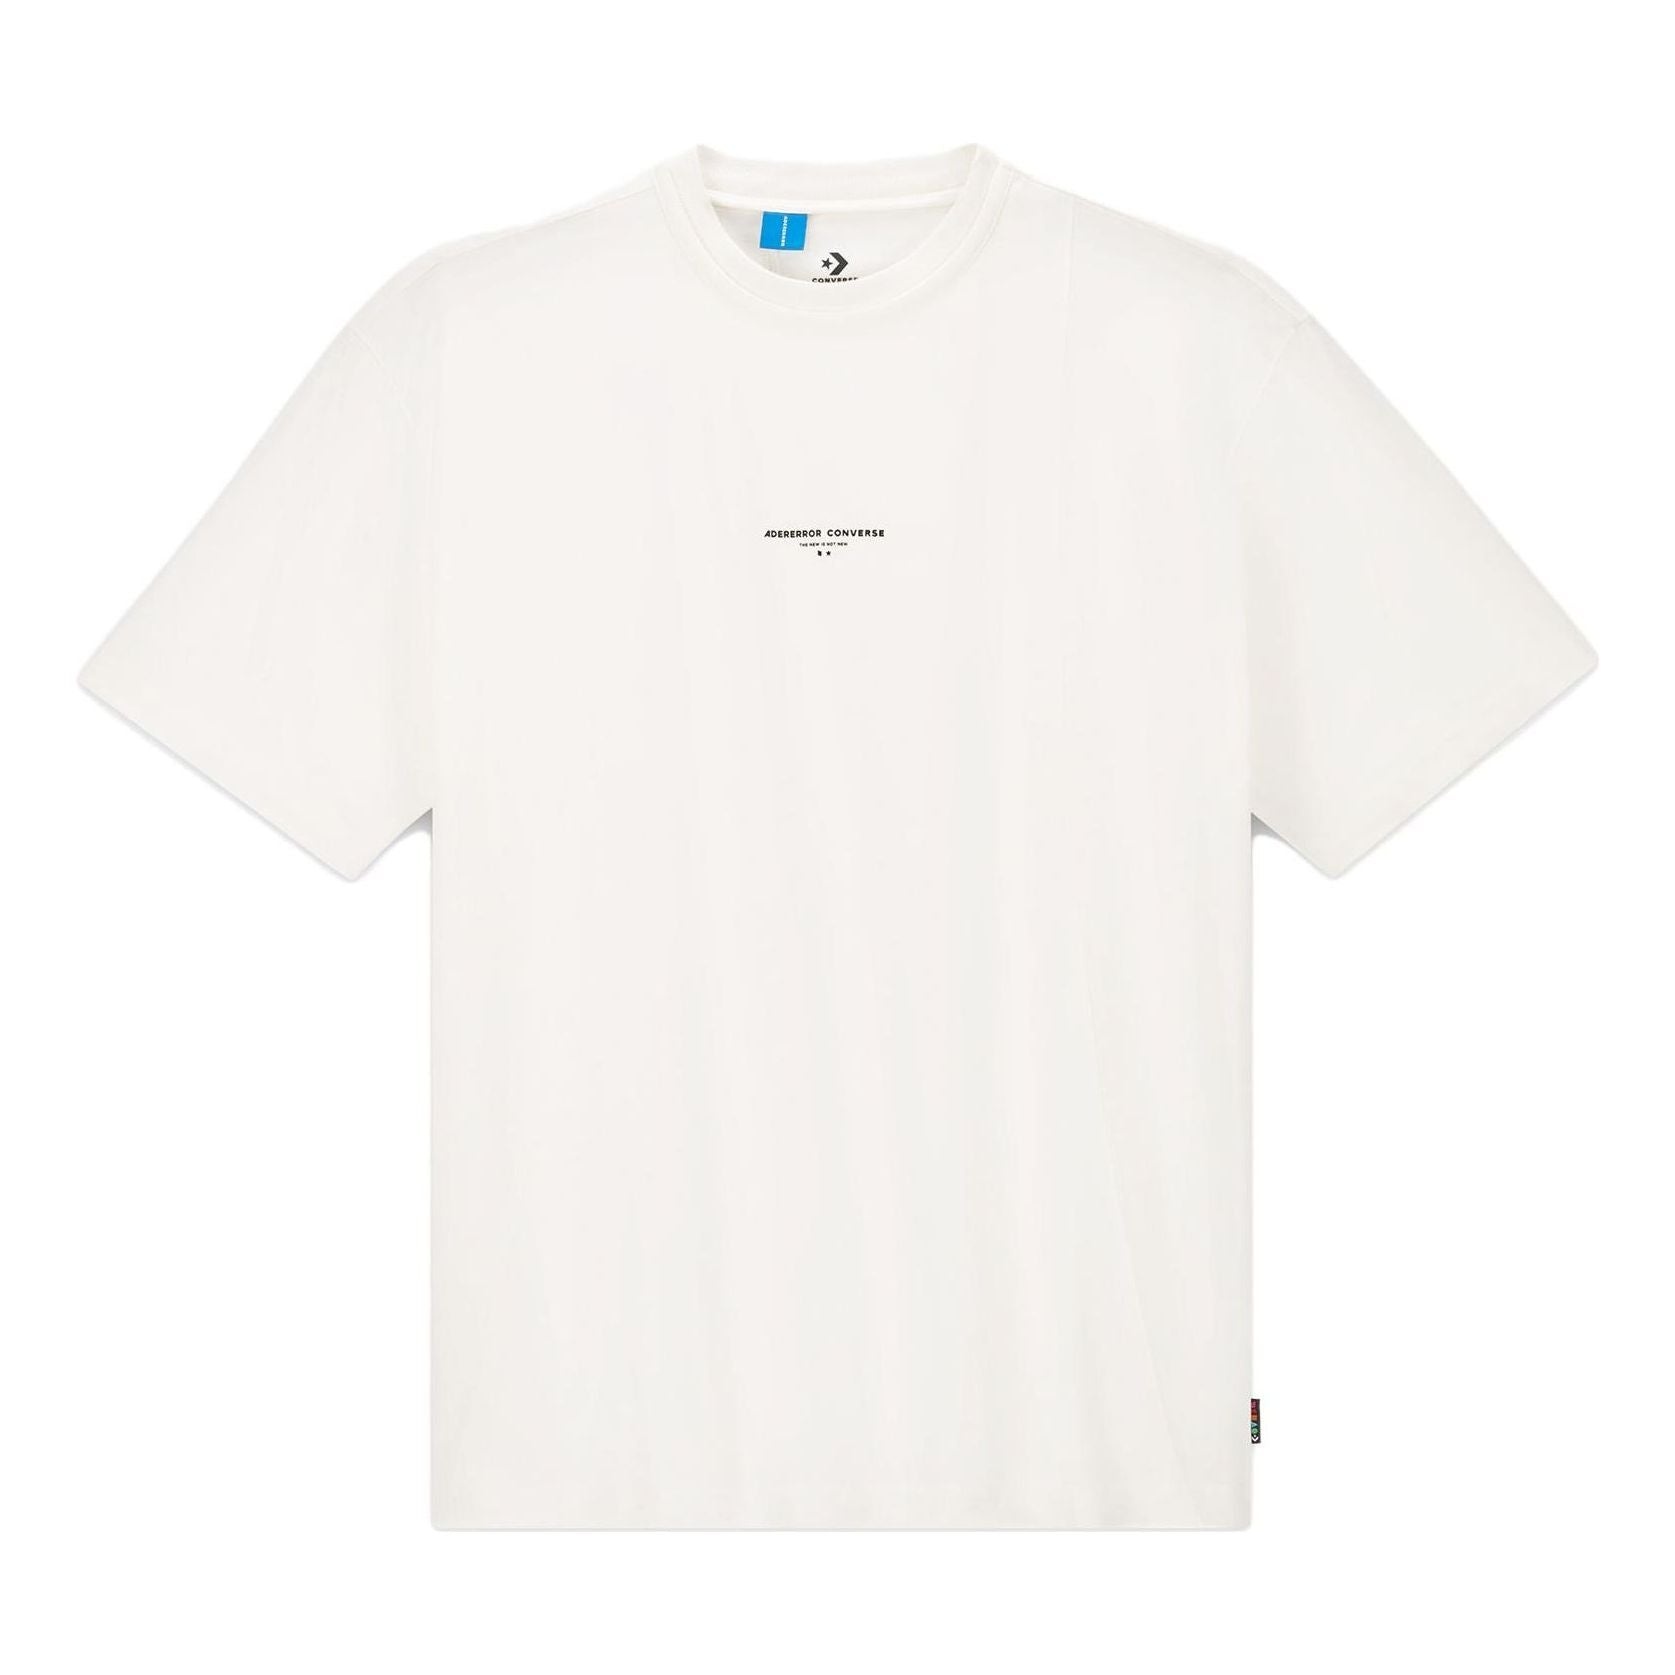 Converse x Ader Error Shapes T-Shirt 'Cloud Dancer' 10025817-A01 - 1